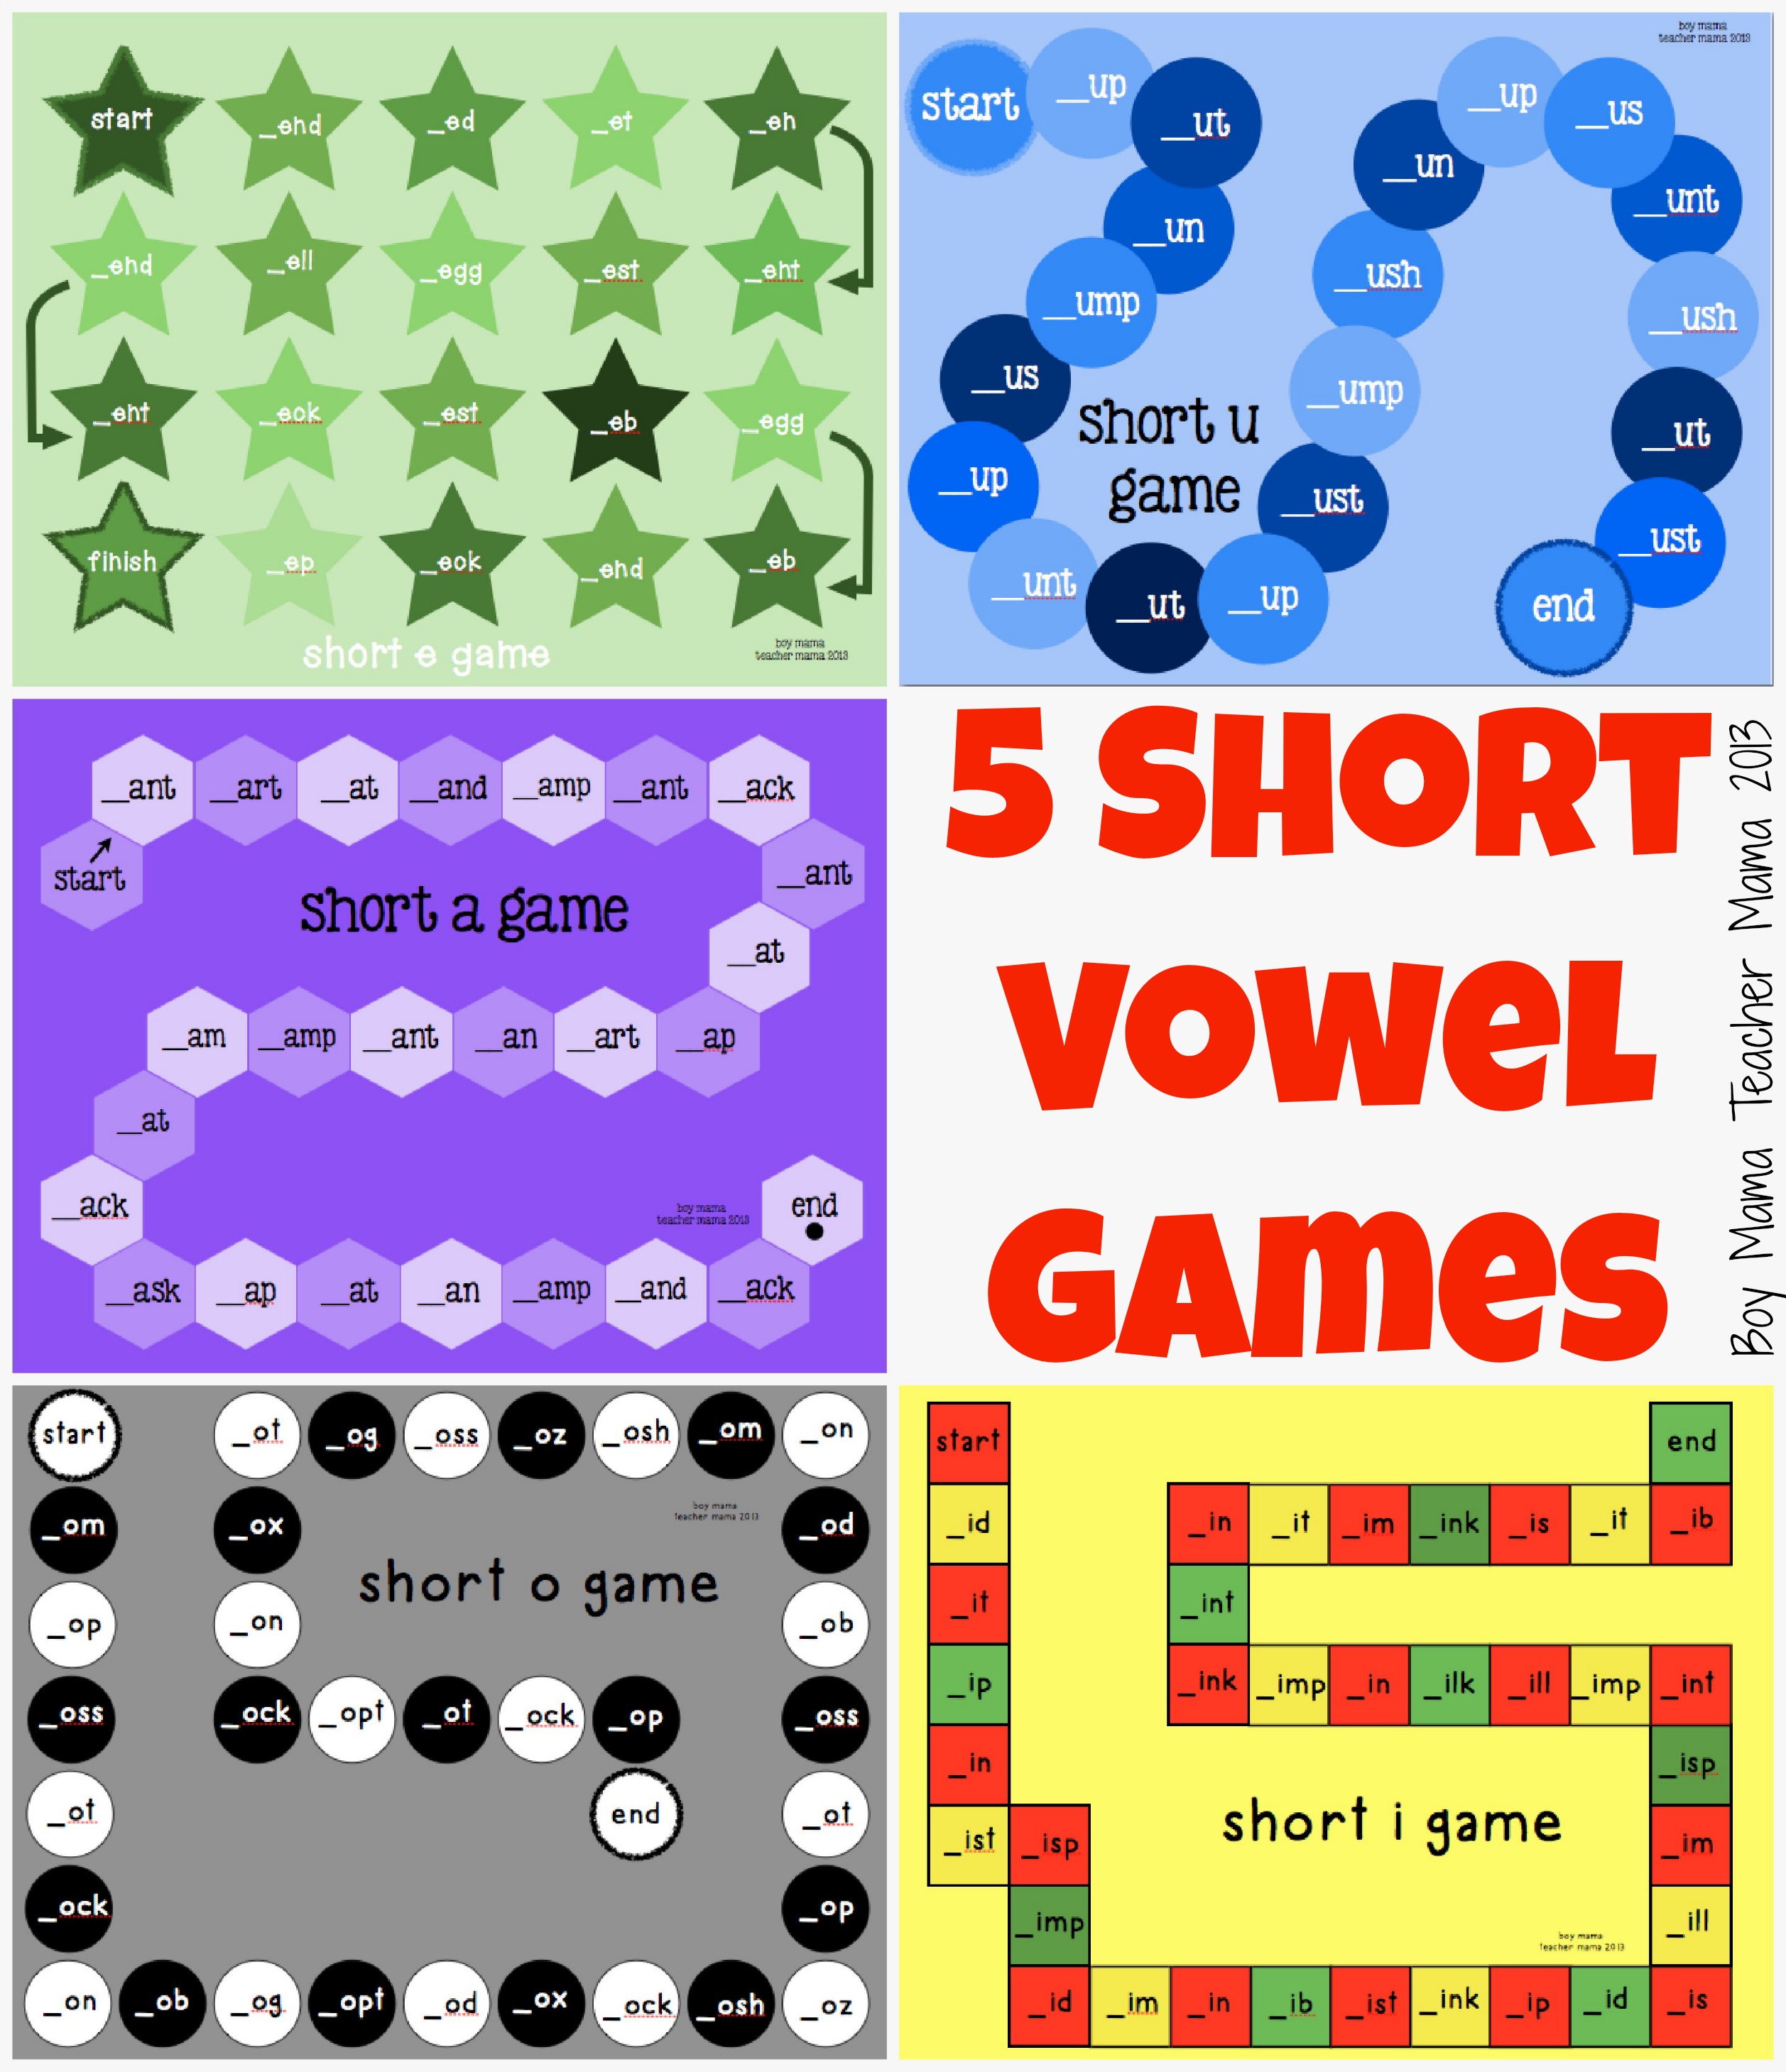 https://boymamateachermama.com/wp-content/uploads/2013/03/5-short-vowel-games.jpg